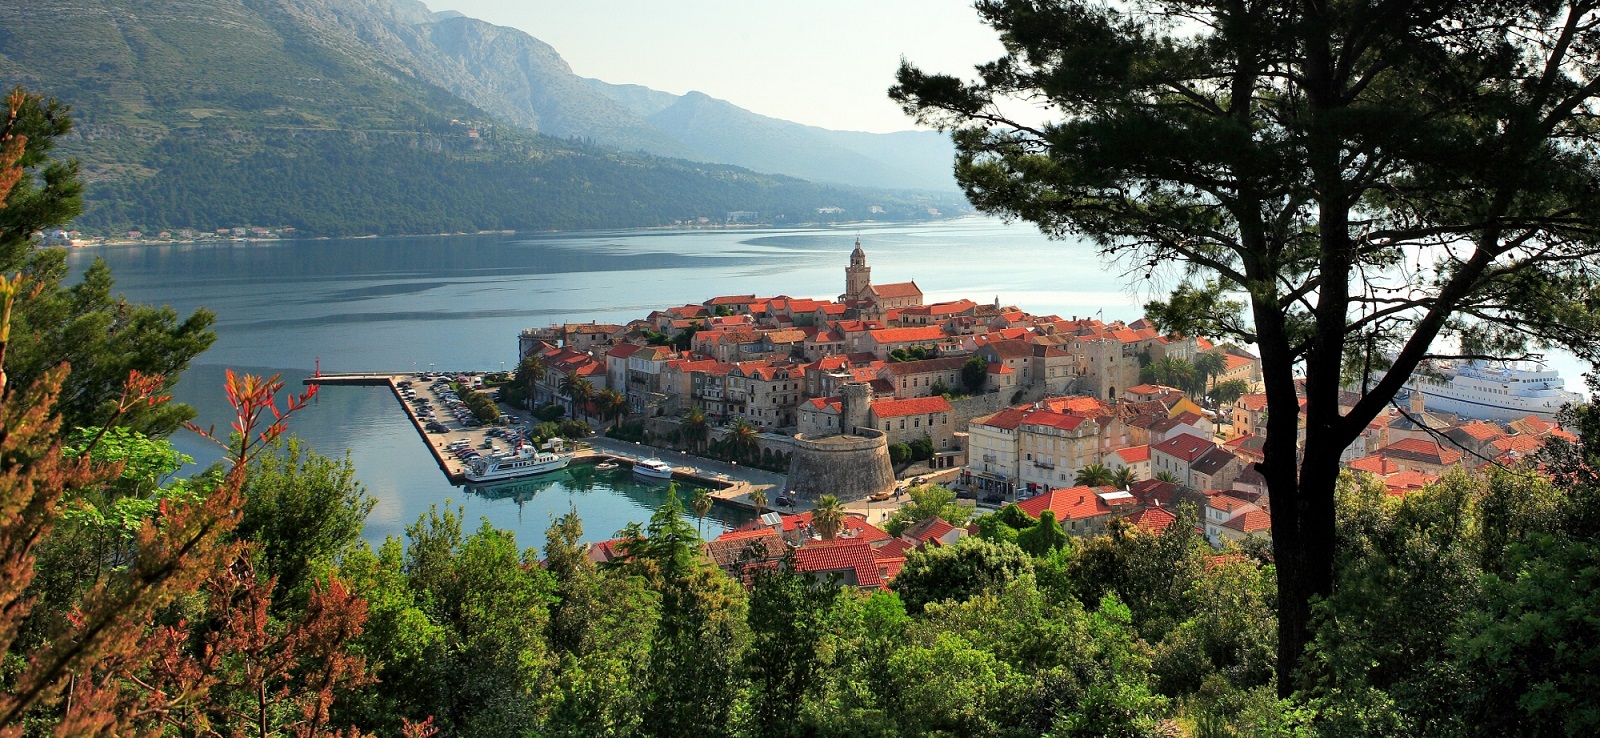 Korcula Credits to Croatian National Tourist Board